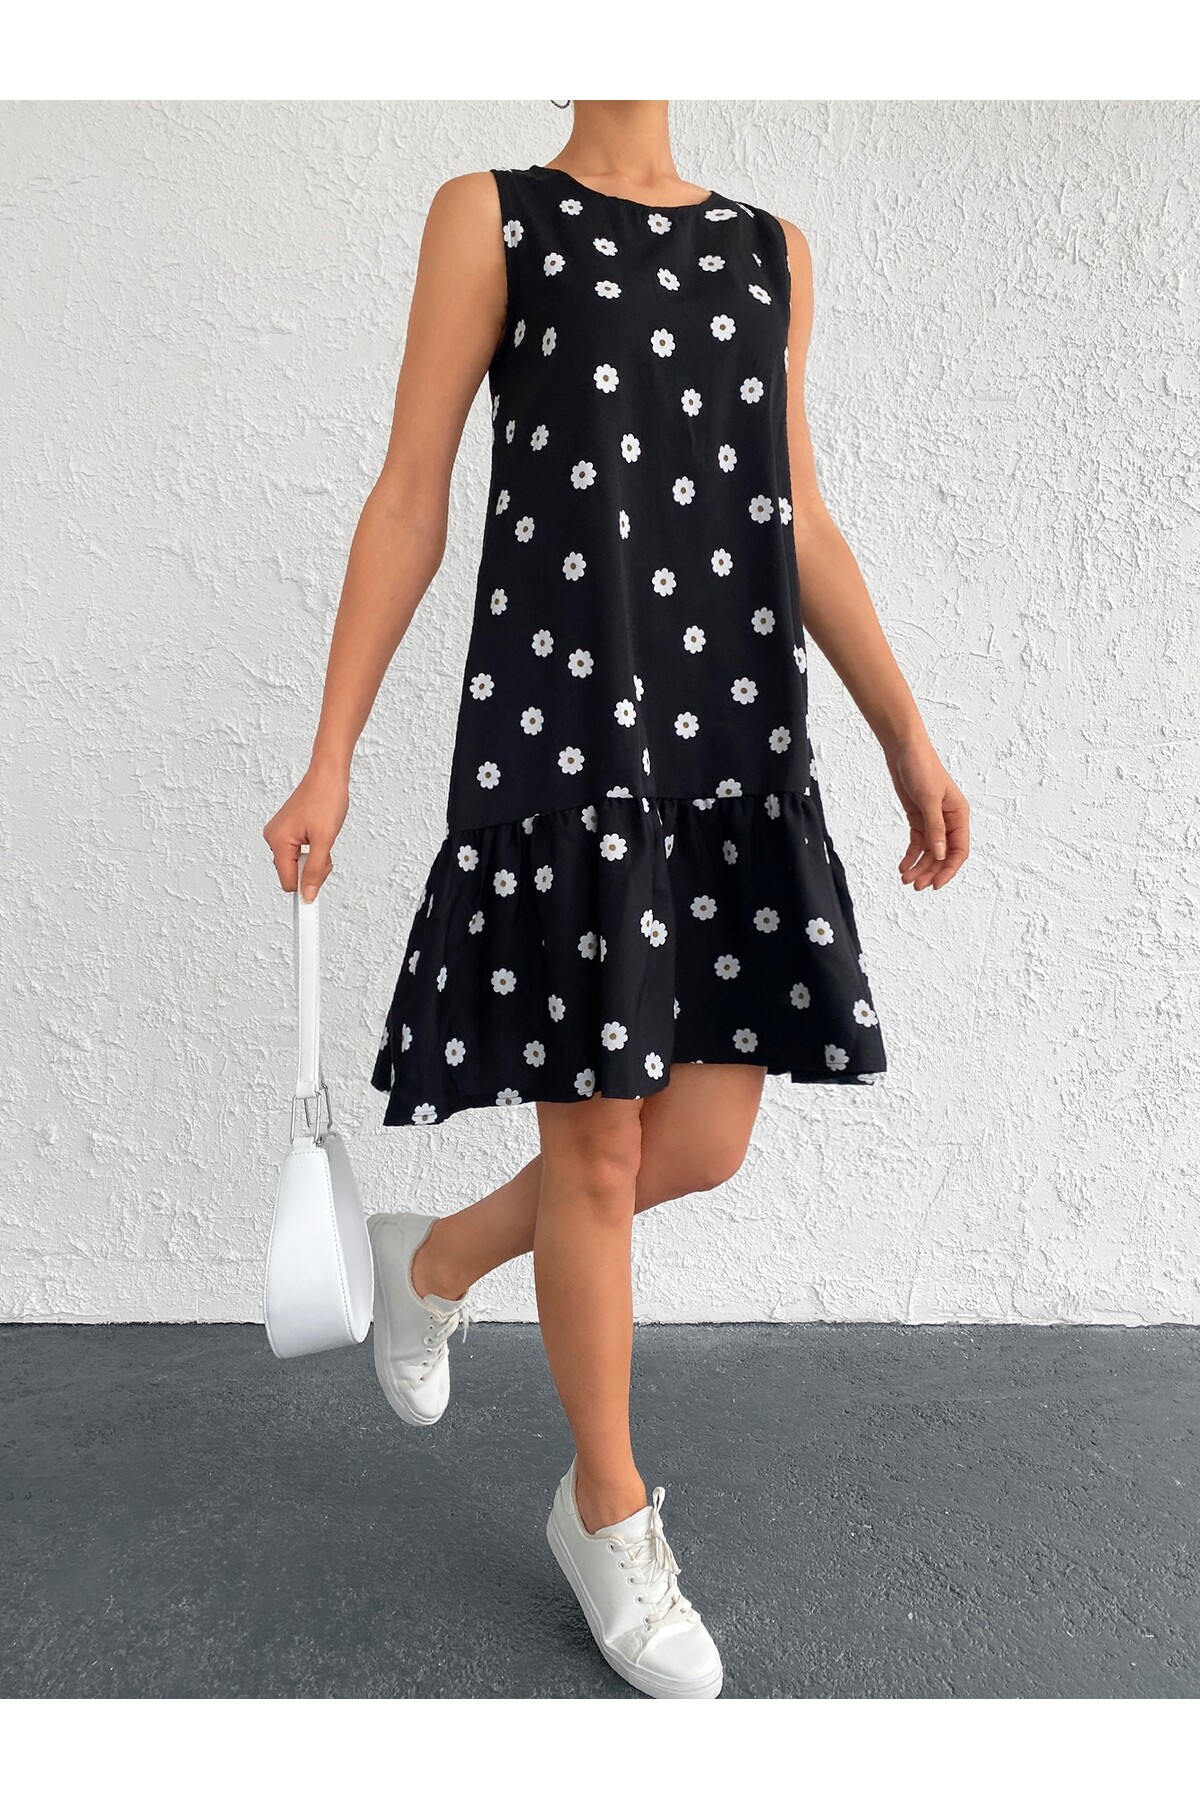 Levně armonika Women's Black Daisy Pattern Sleeveless Frilly Skirt Dress